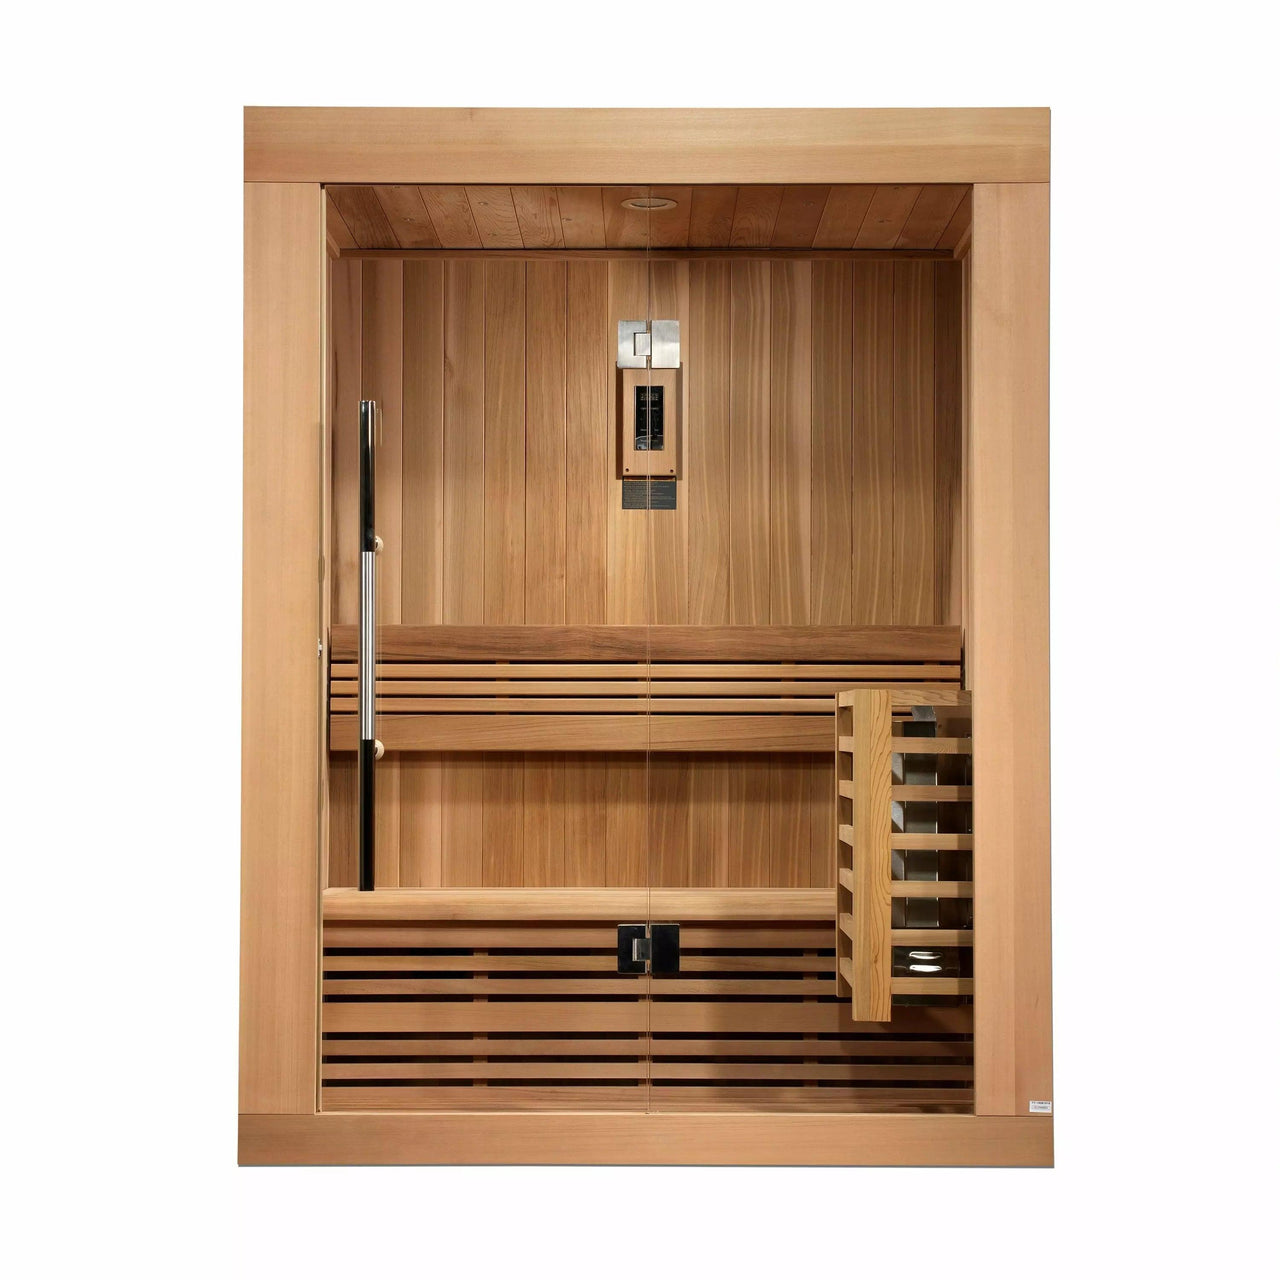 Golden Designs Sauna: "Sundsvall Edition" 2 Person Traditional Steam Sauna - Canadian Red Cedar - Fire Pit Stock